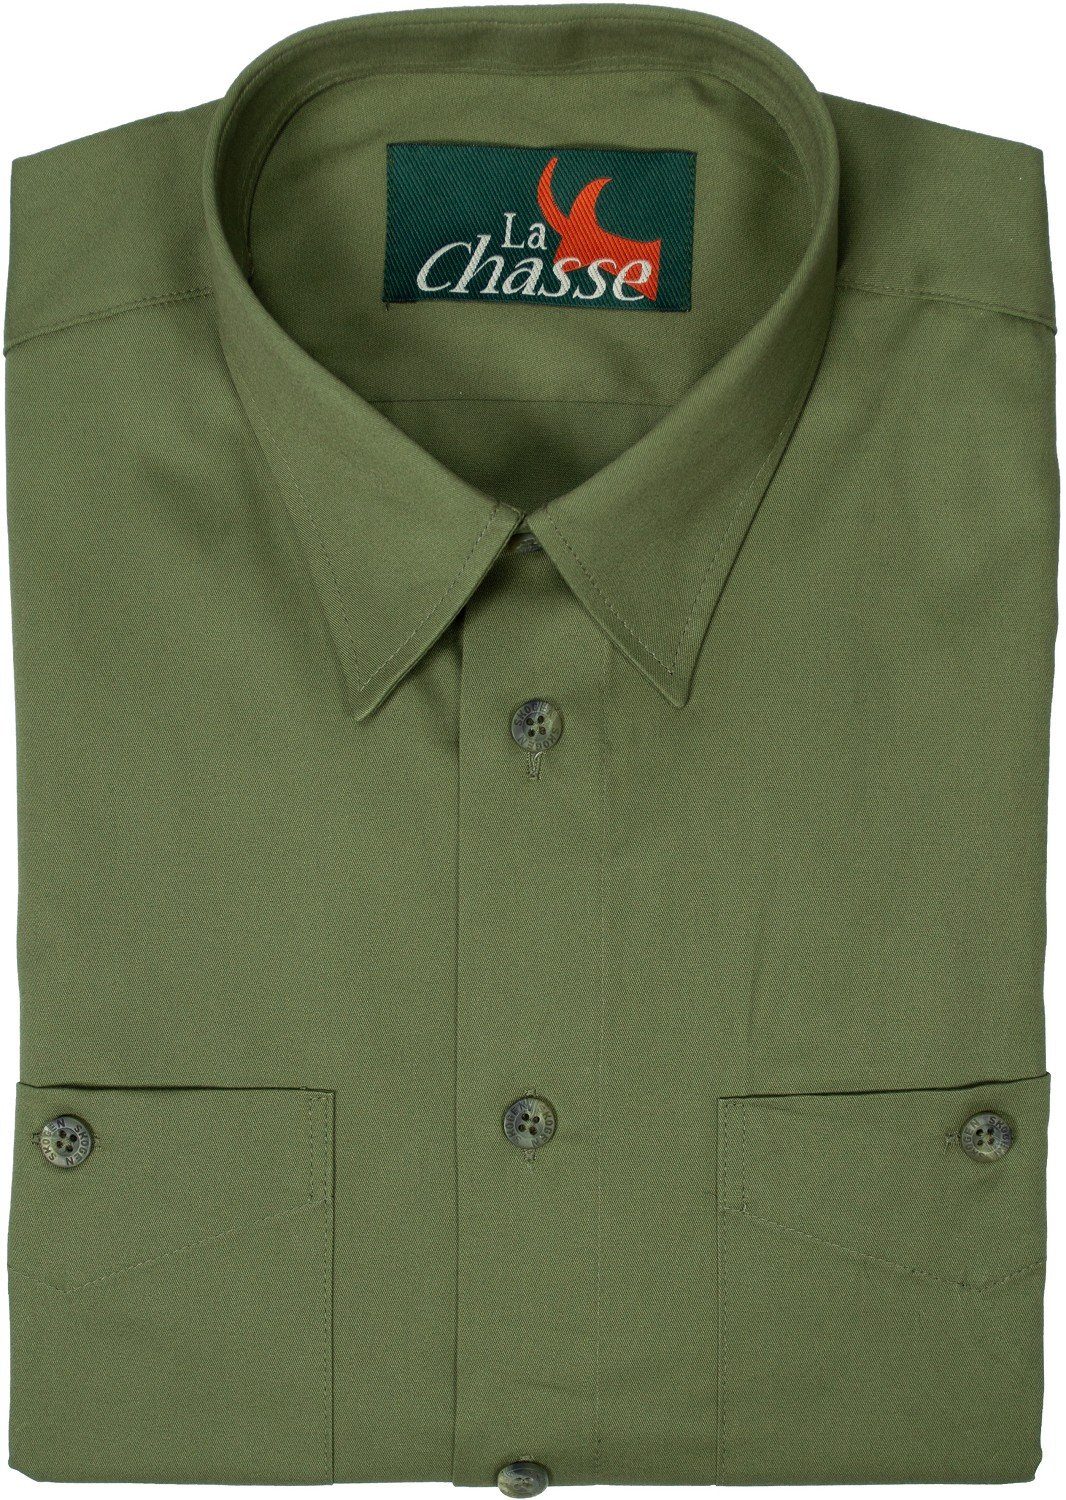 La Chasse® Outdoorhemd Jagdhemd einfarbiges, olivgrünes Herrenhemd Jägerhemd Outdoorhemd